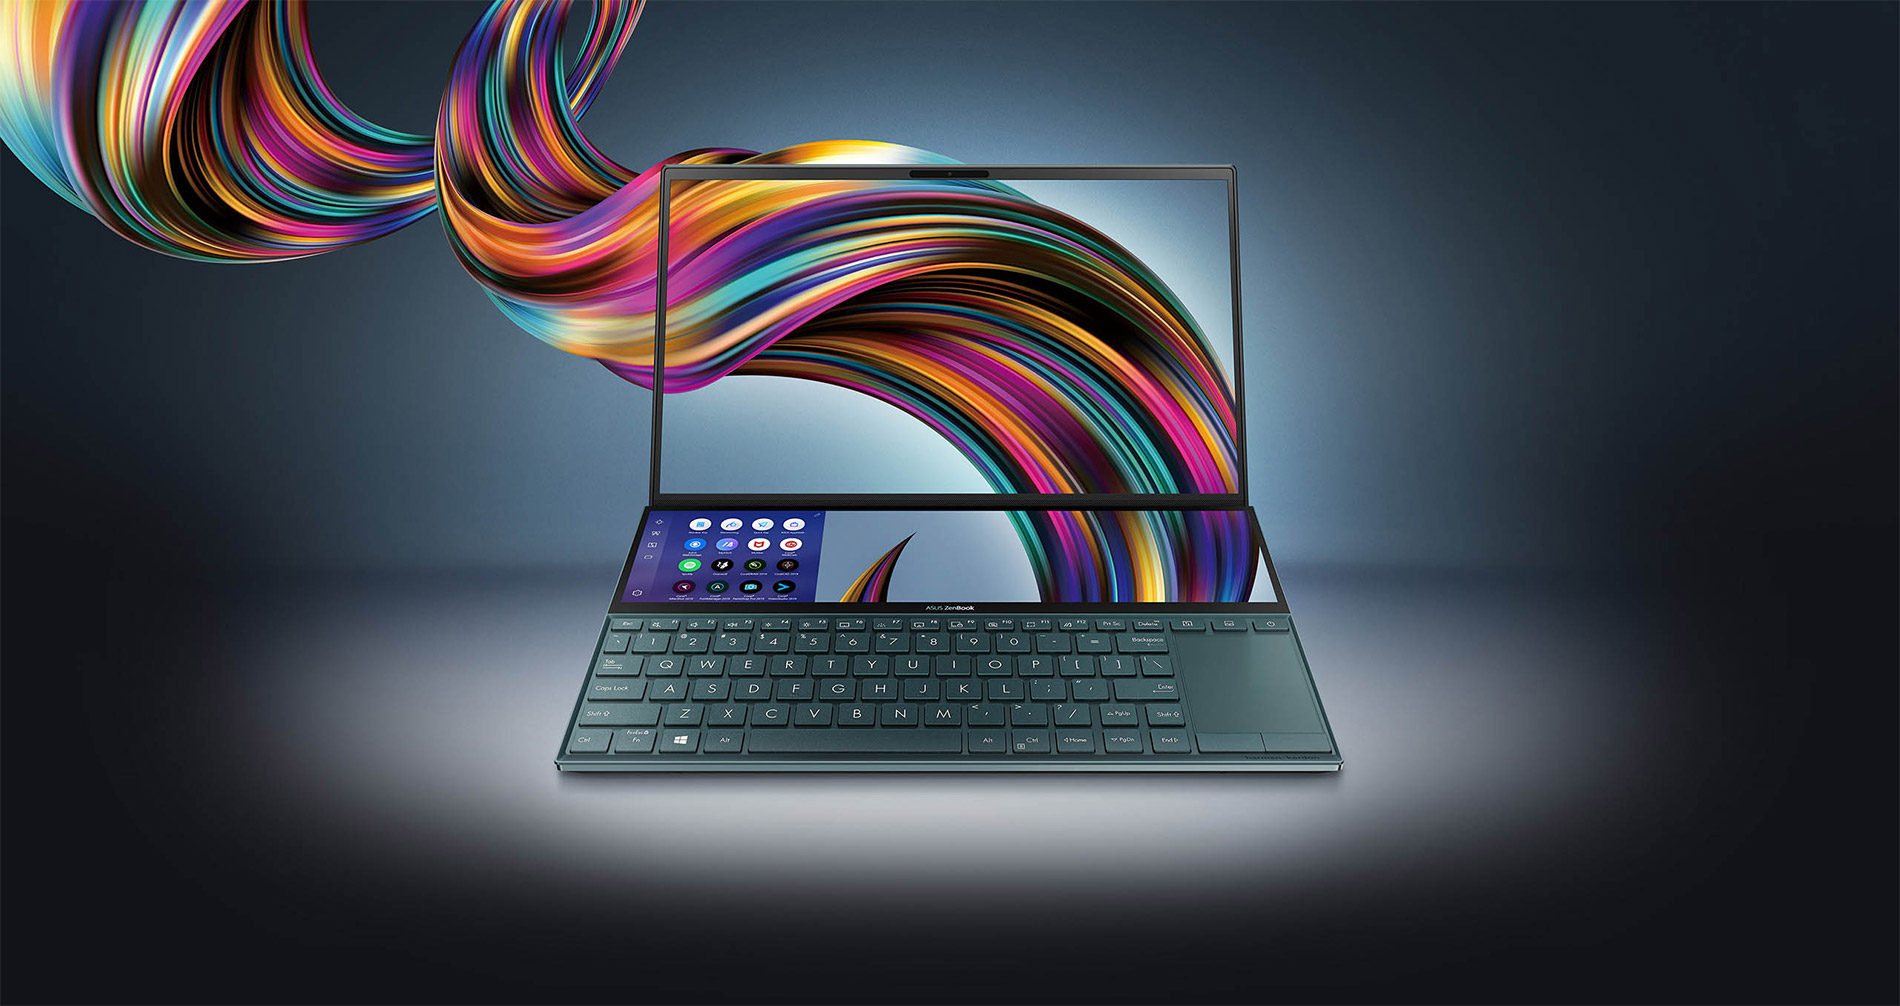 ASUS ZenBook Pro Duo laptop for artists